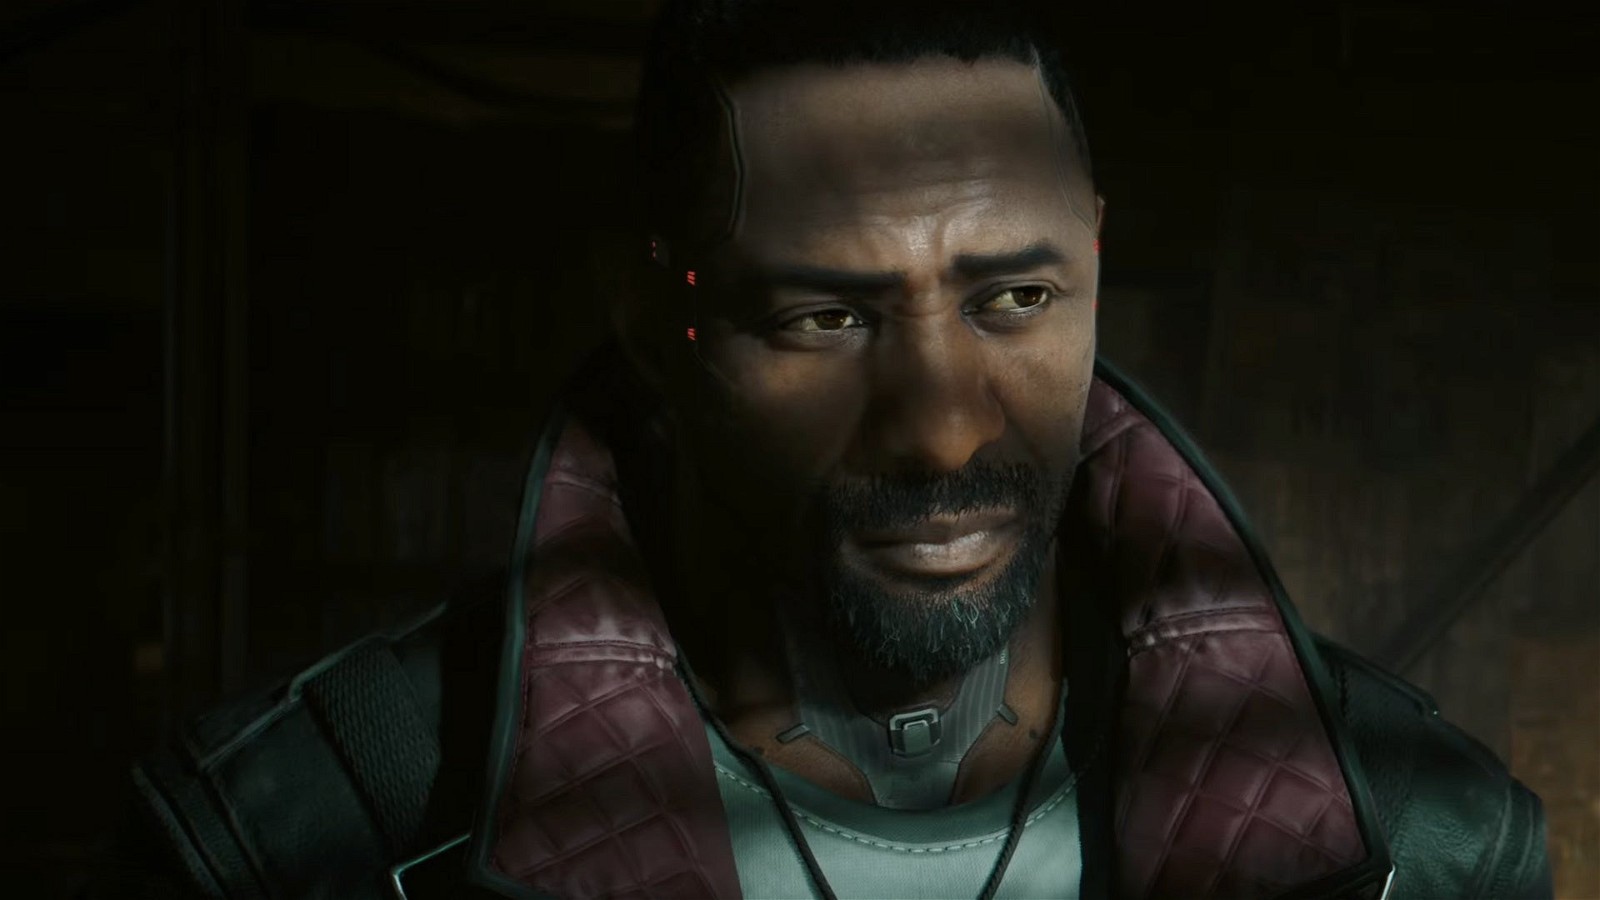 Cyberpunk 2077's Solomon Reed, played by Idris Elba